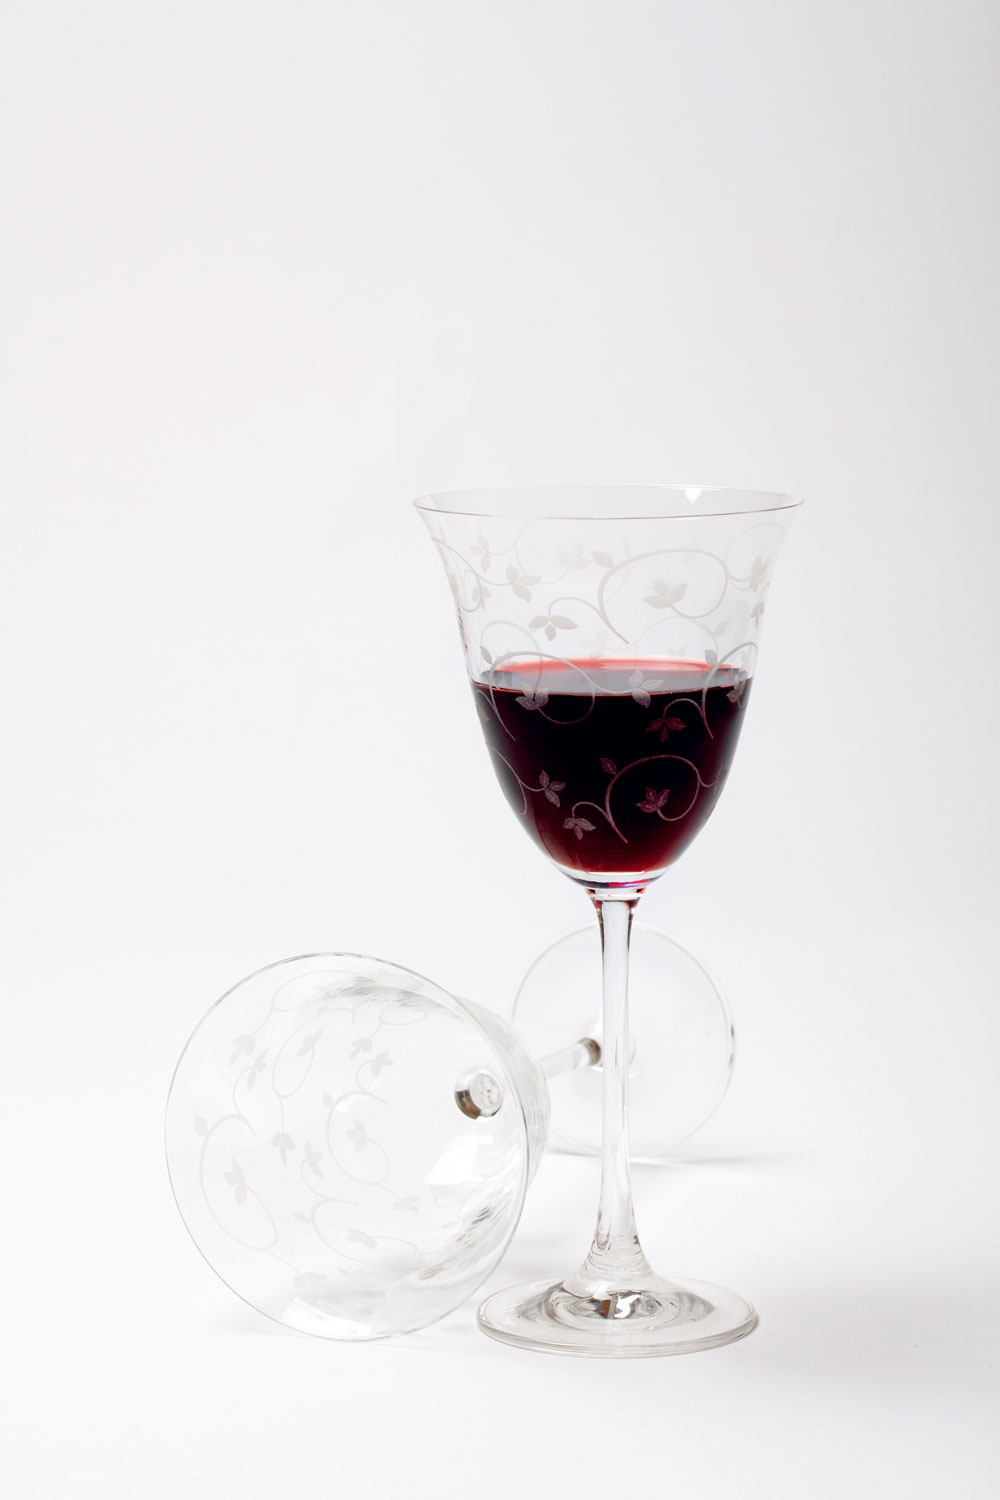 Bielymi ornamentmi zdobené poháre Scarlet od firmy Ritzenhoff-Breker. Objem 26 cl. Cena 12,40 €. Predáva Galan.